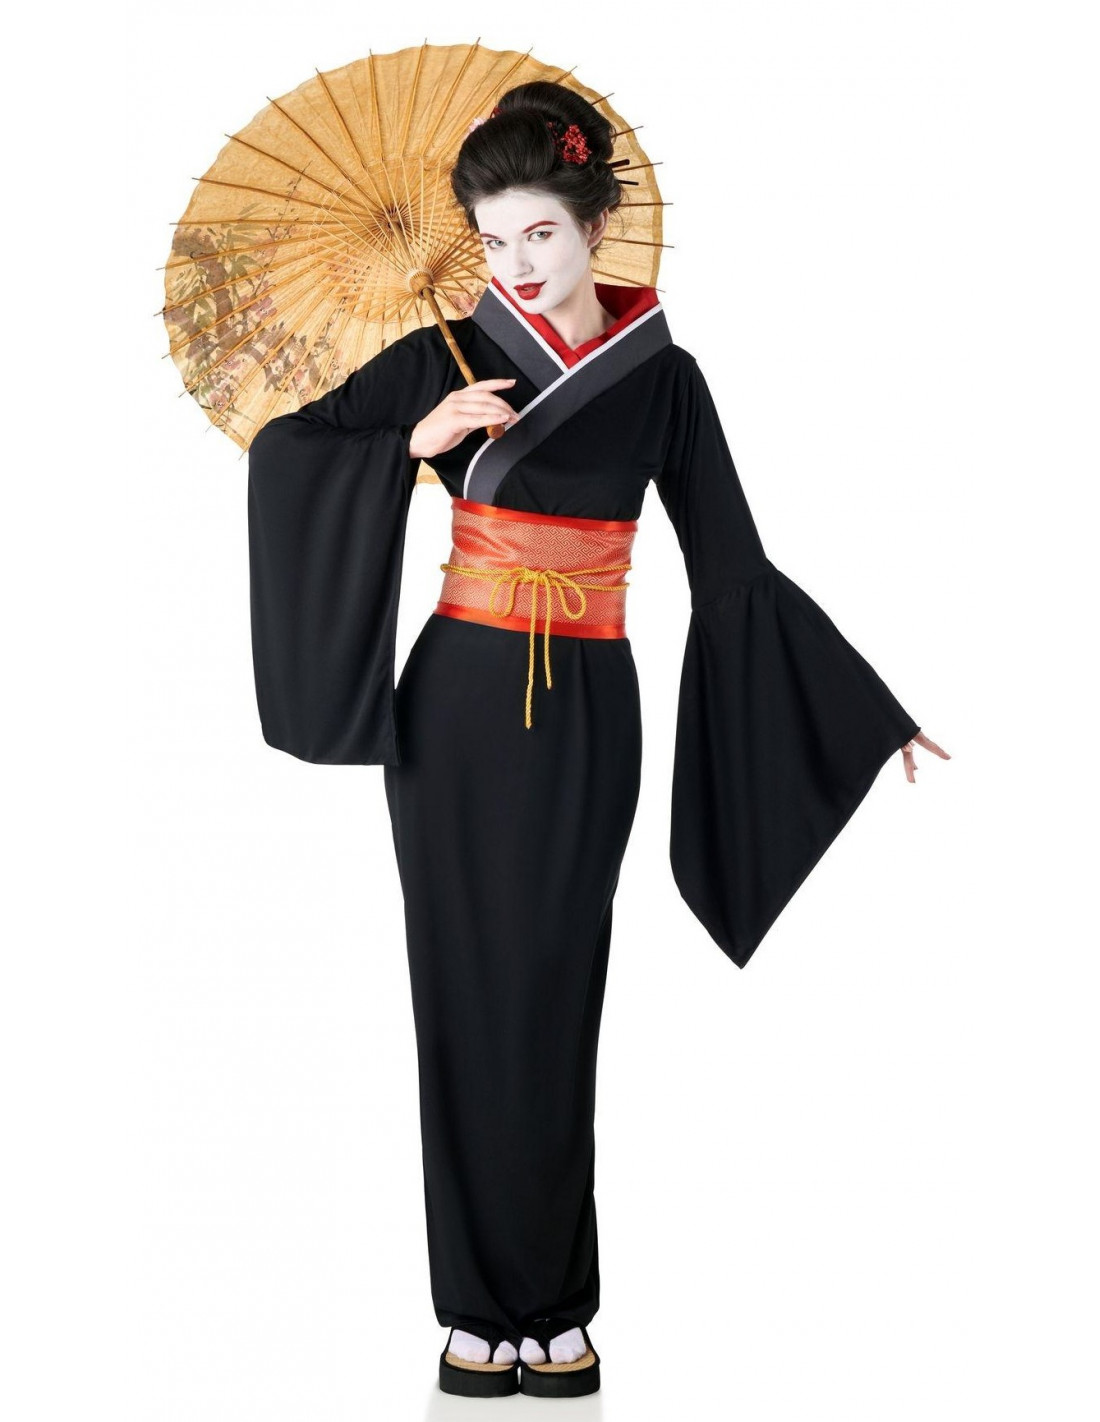 Atosa disfraz geisha mujer adulto rosa XL